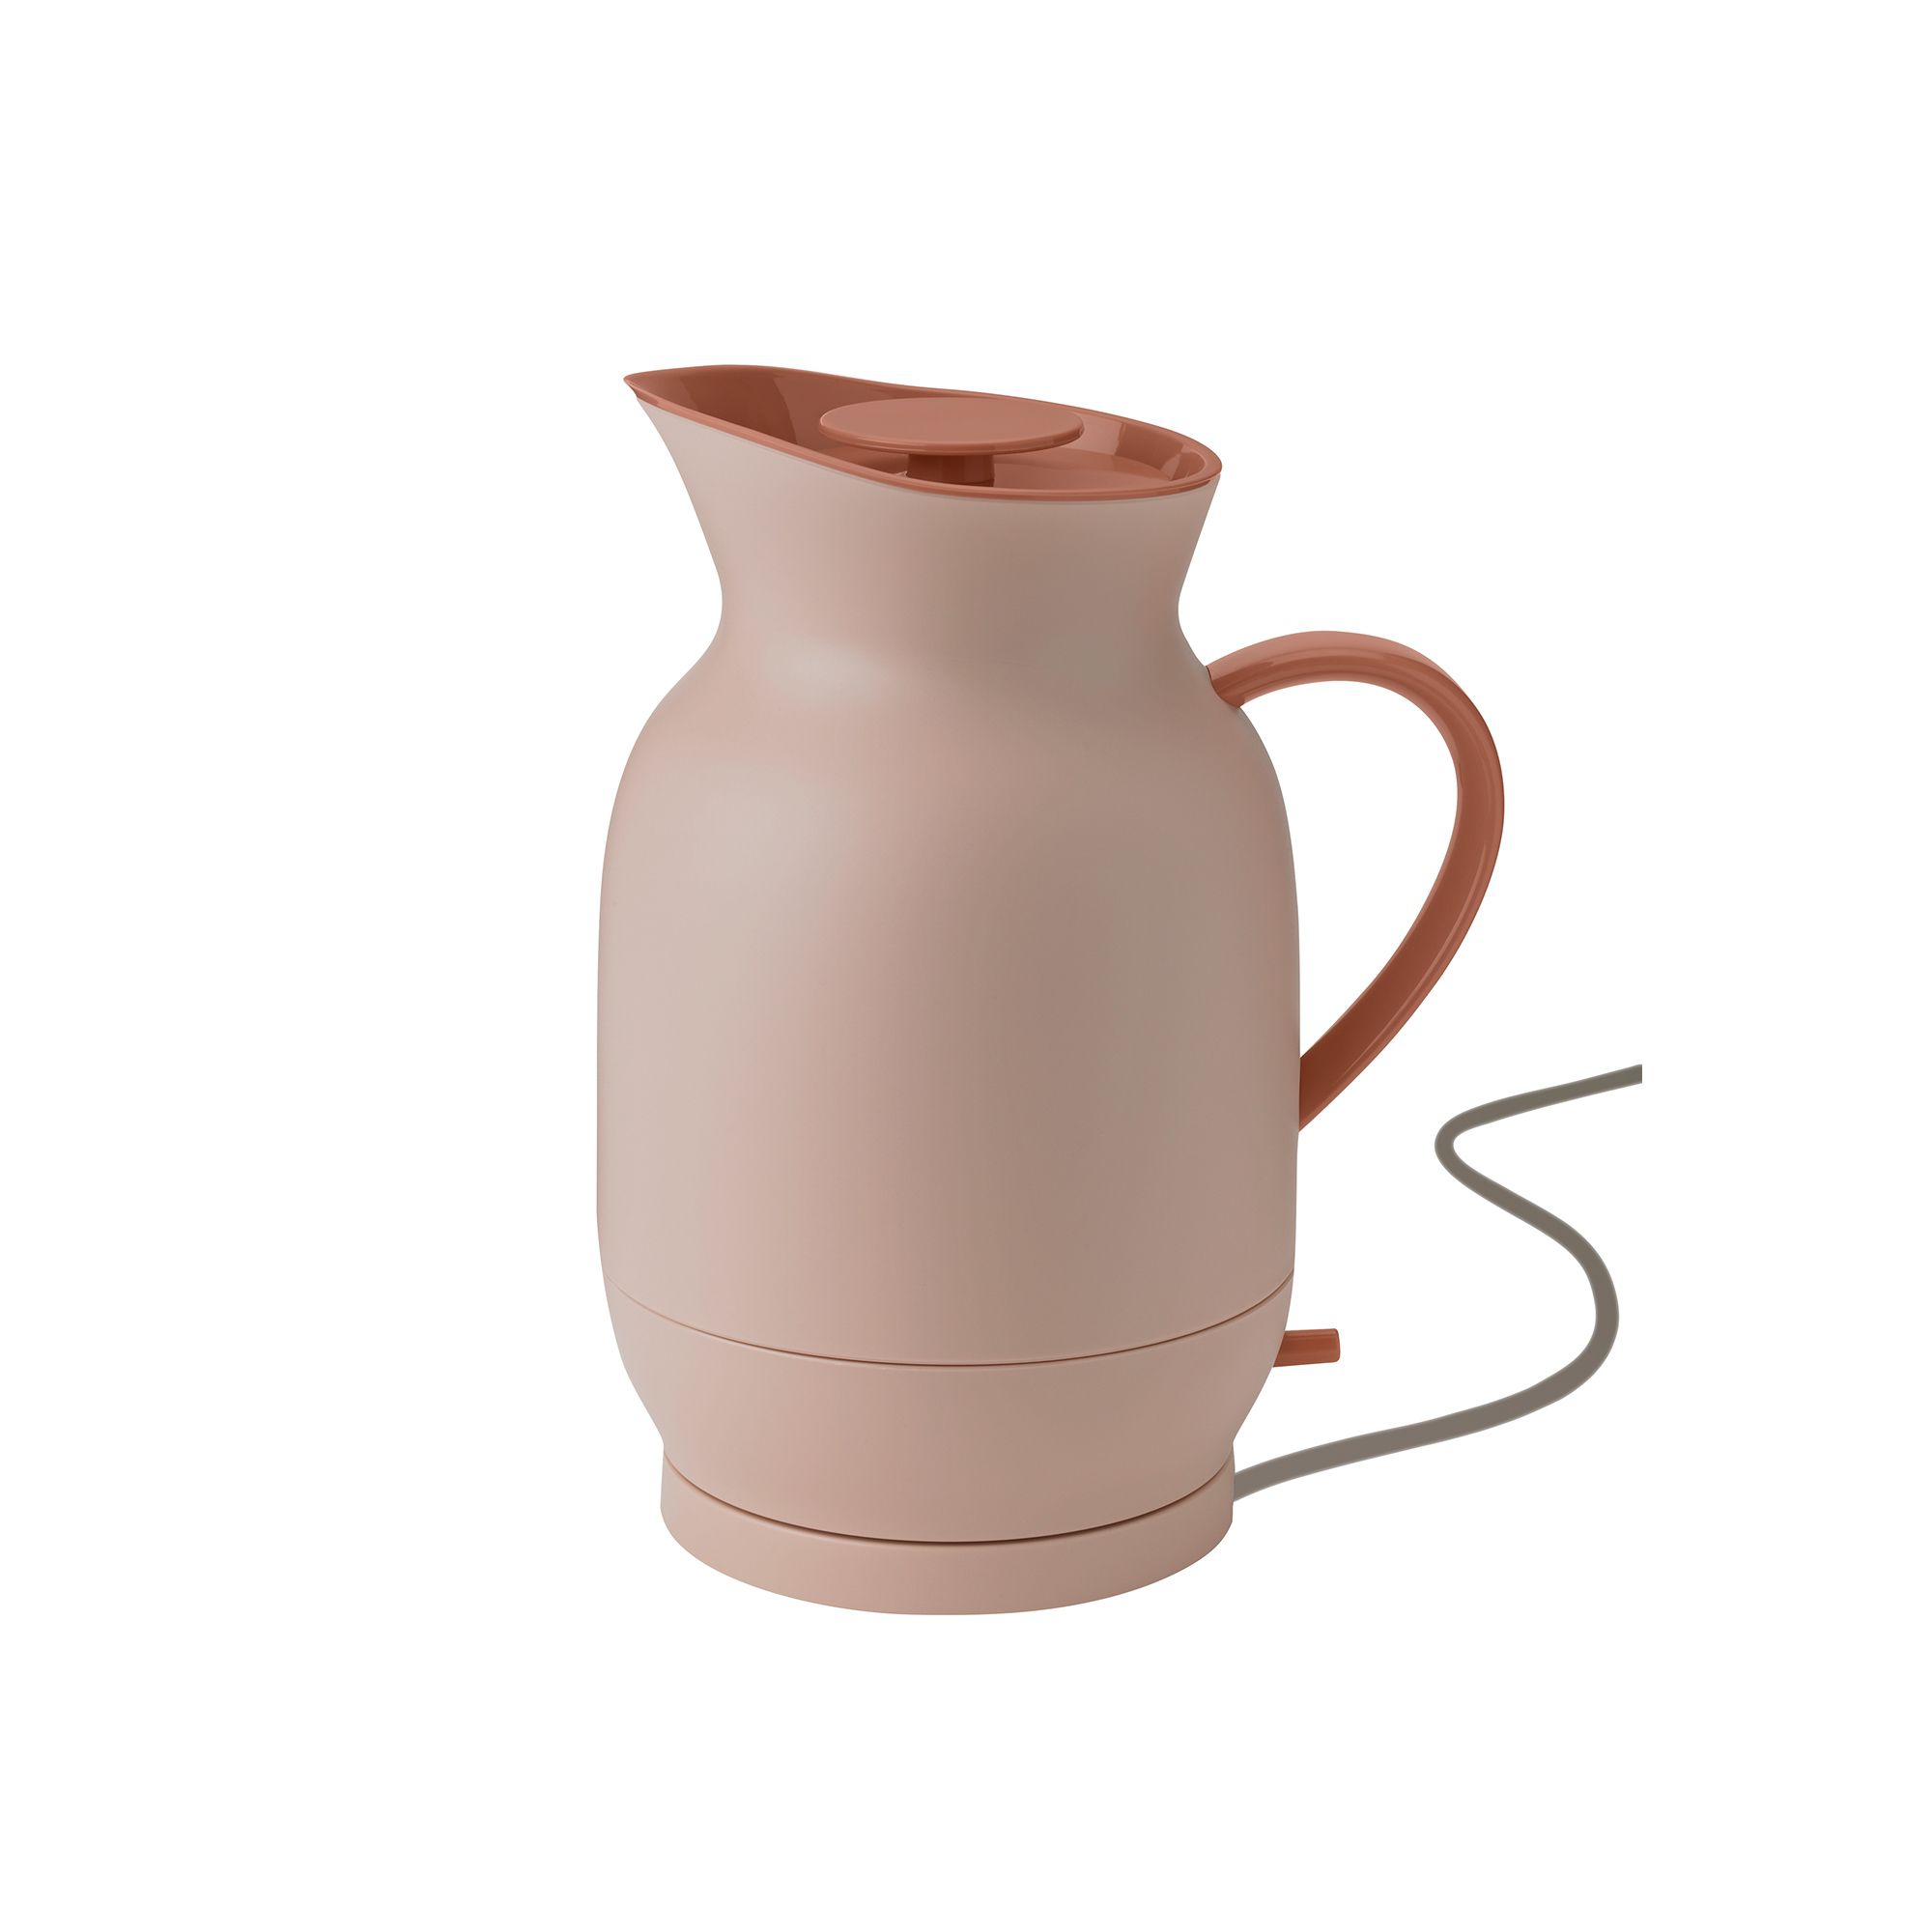 Stelton Electric Kettle Amphora 1.2L - soft peach